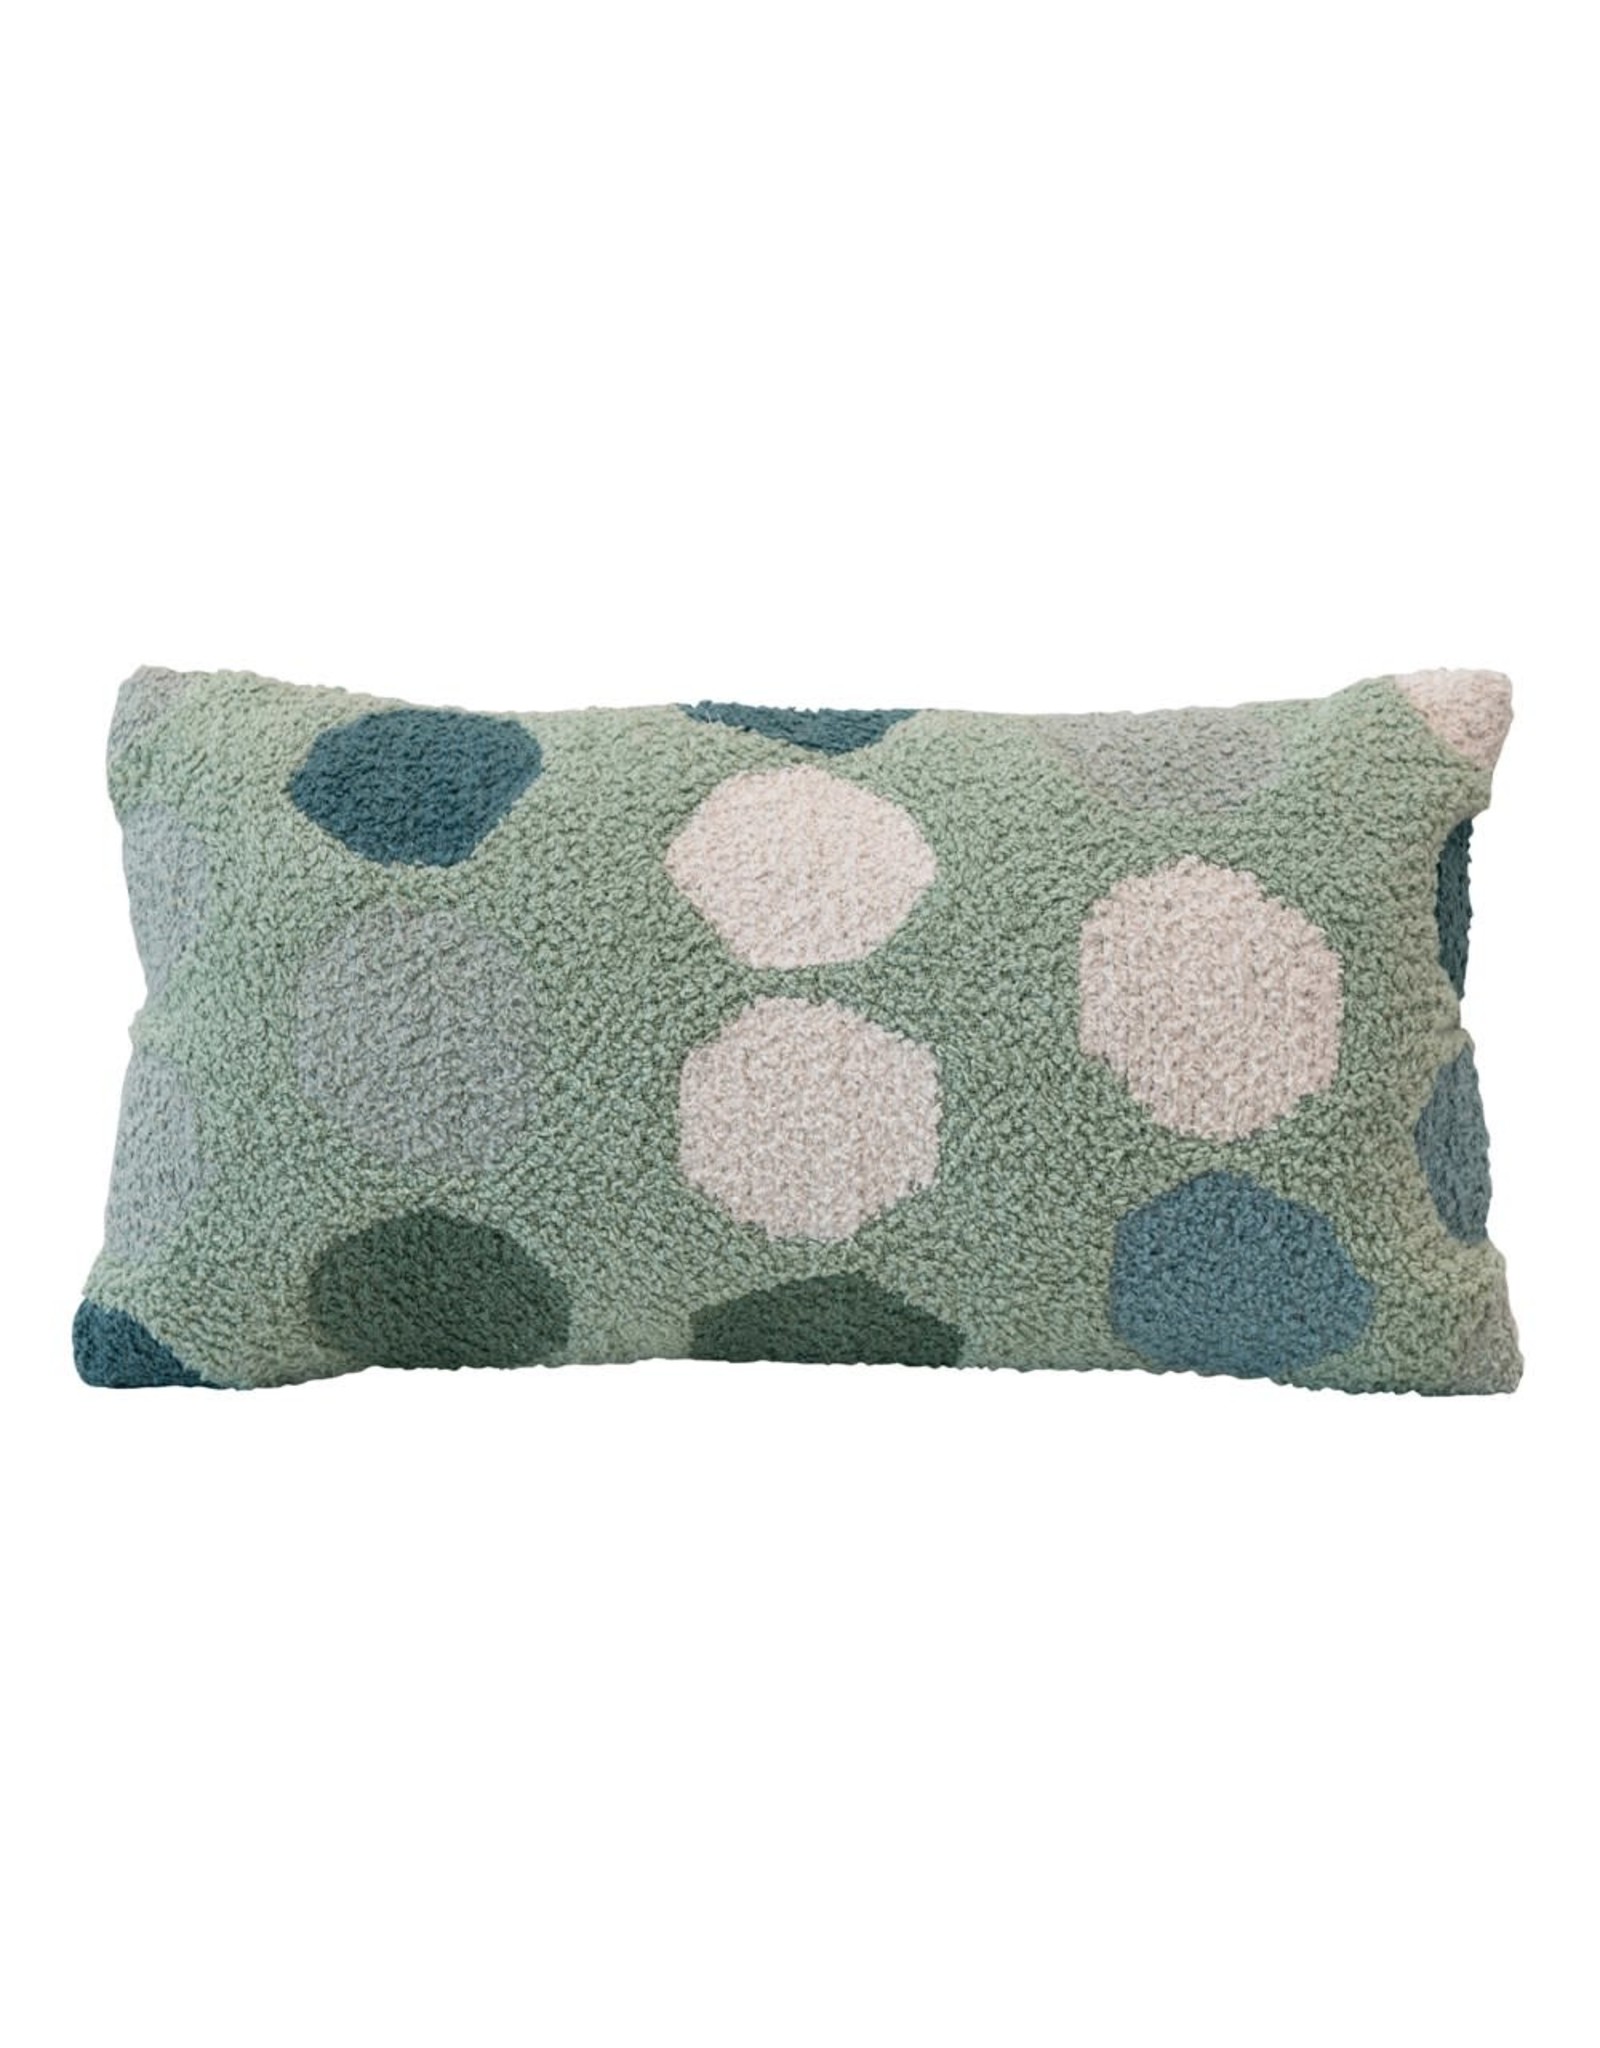 Creative Co-op Lumbar Pillow w/ Dots, Multi Color